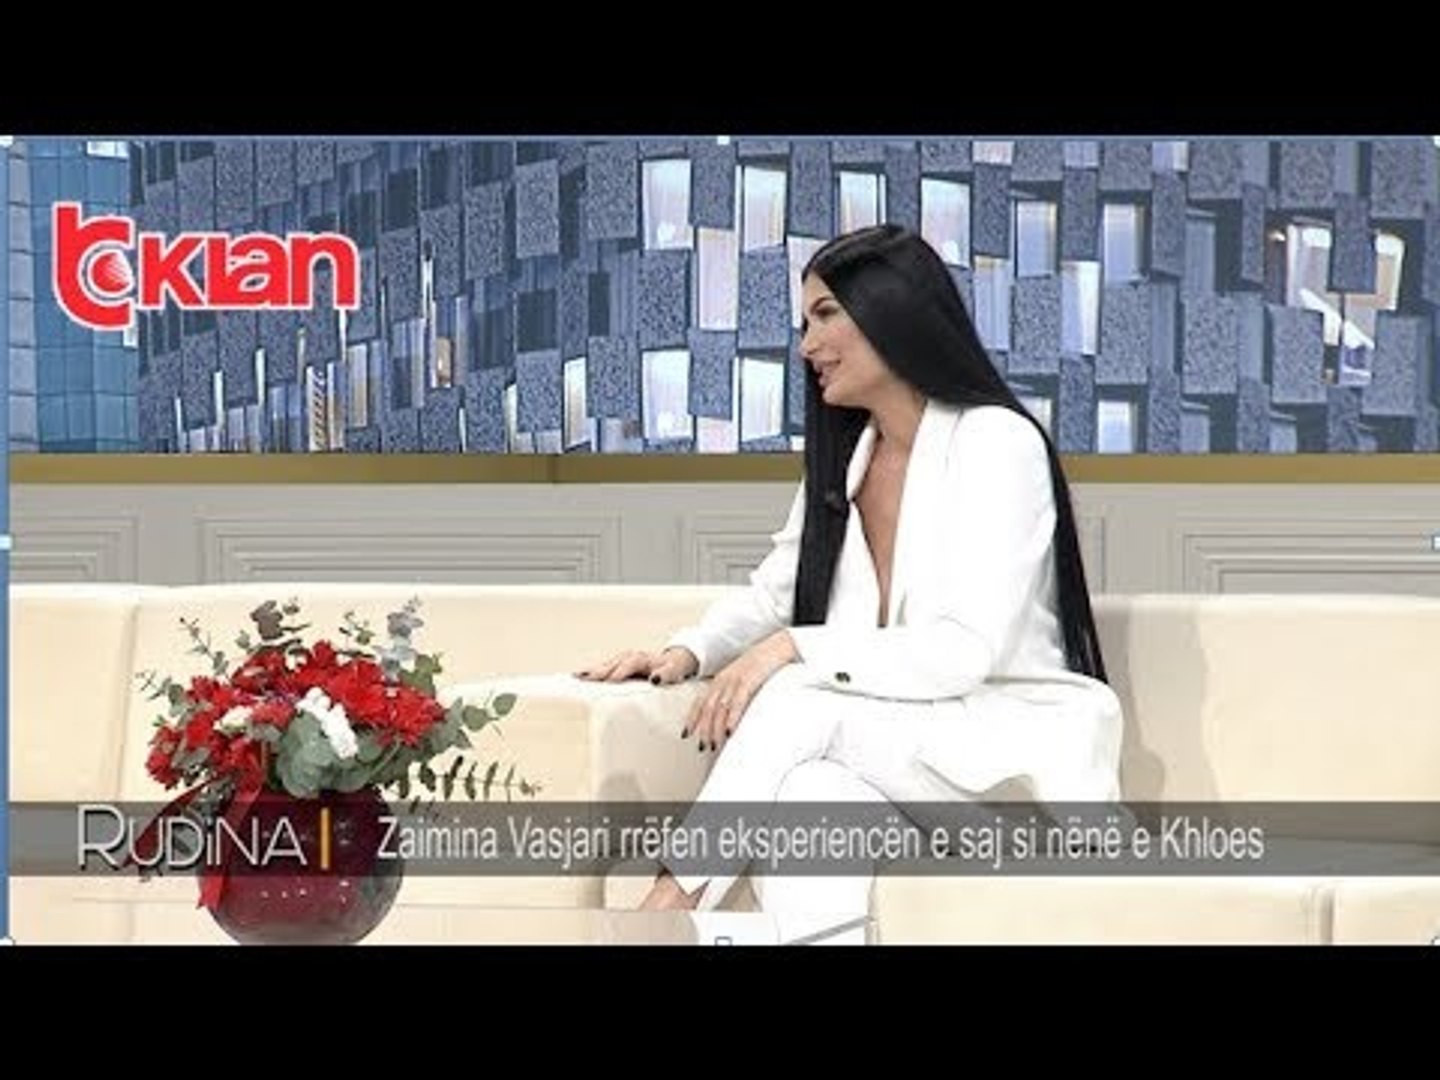 ⁣Rudina - Zaimina Vasjari rrefen eksperiencen e saj si nene e Khloes! (18 mars 2019)